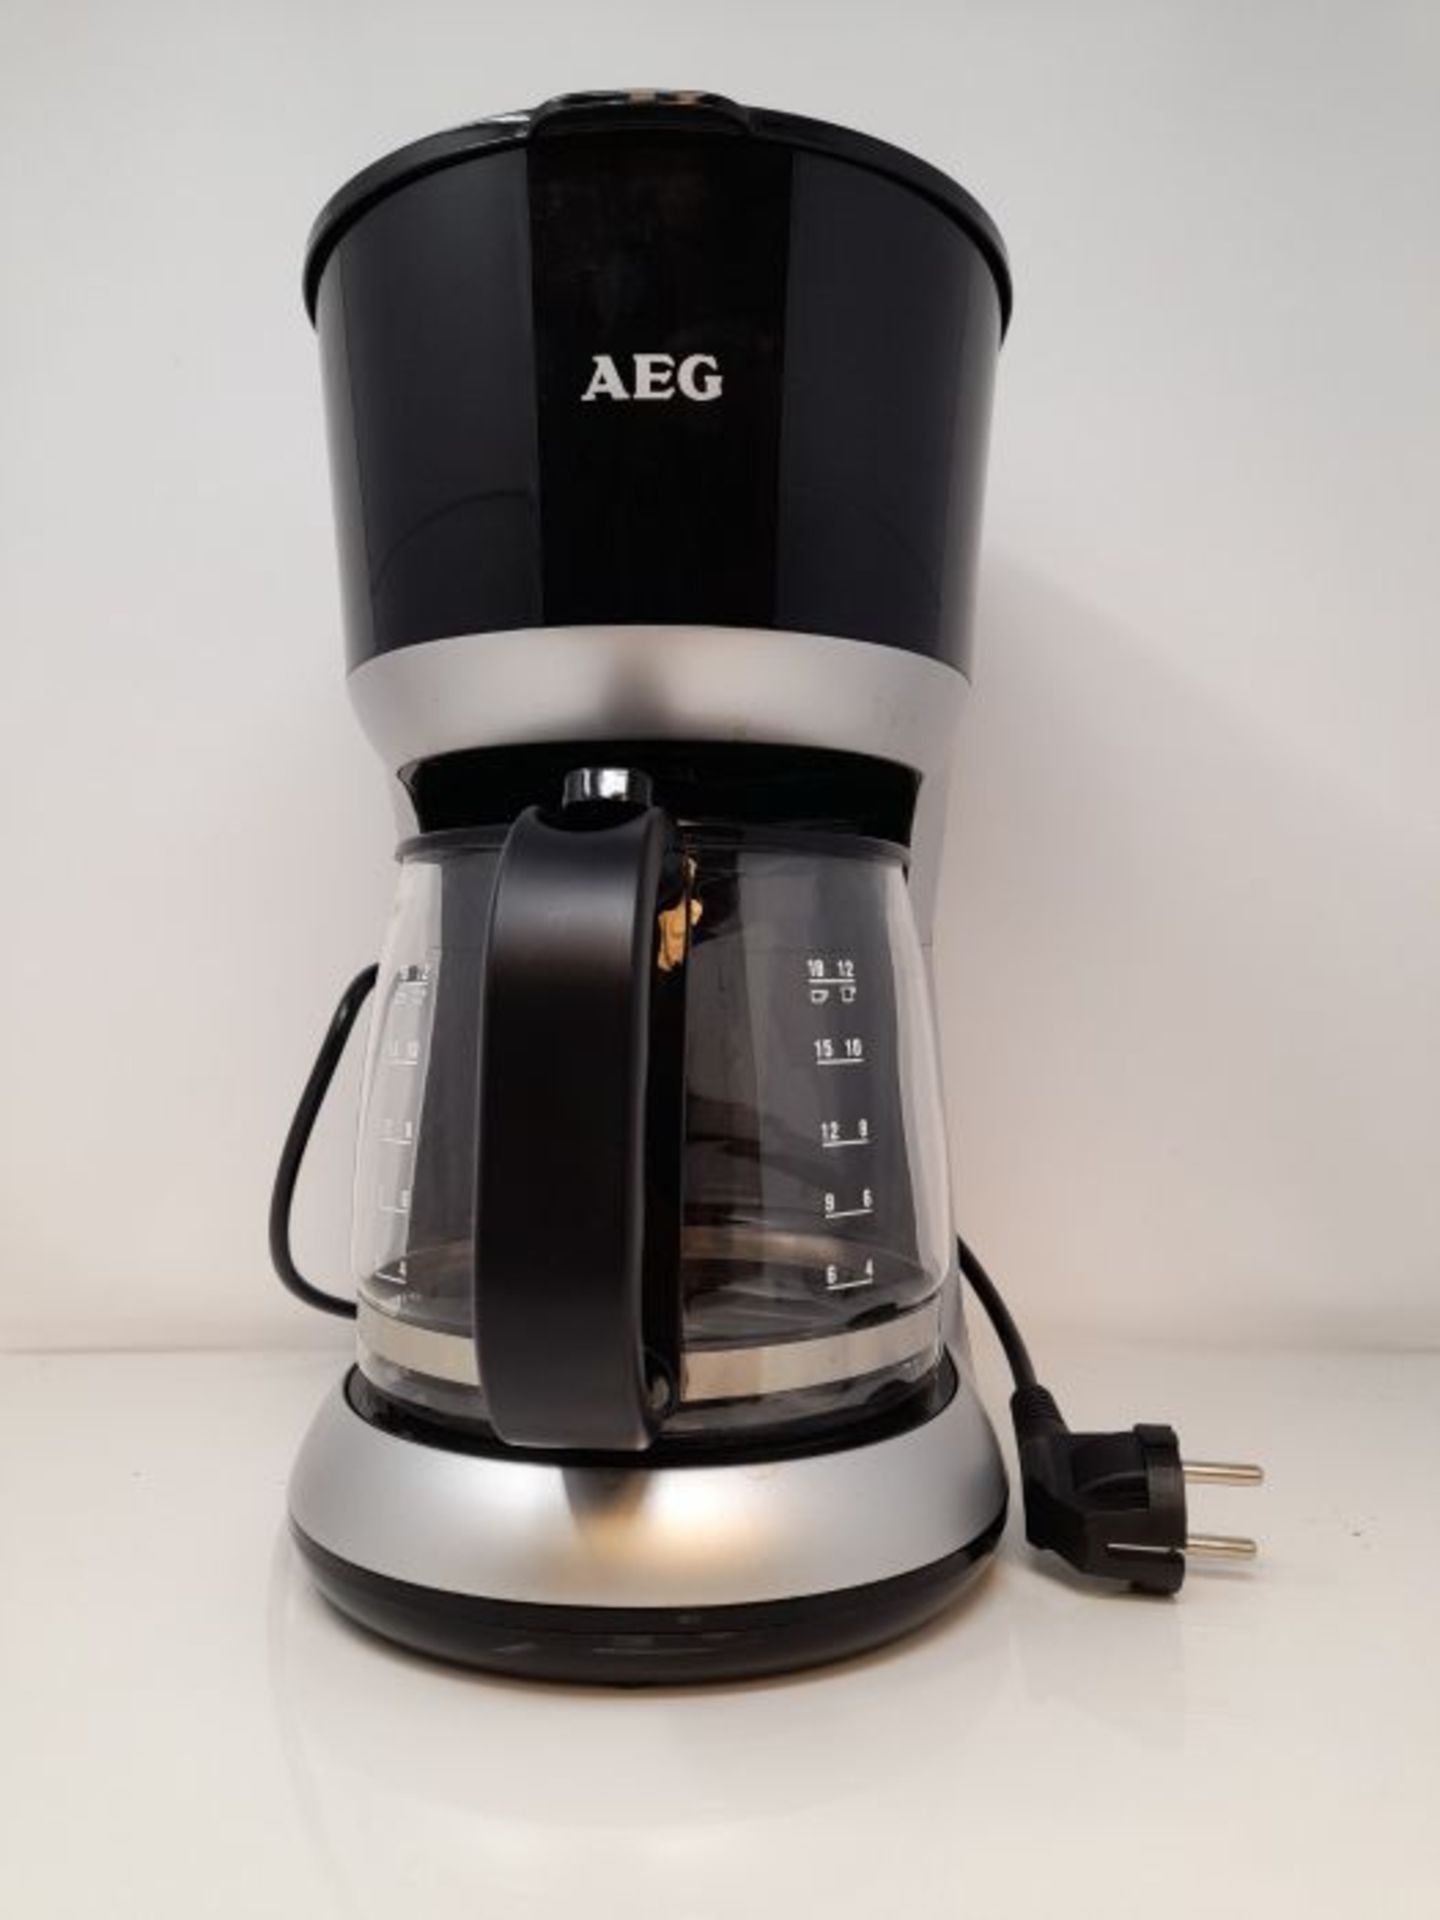 AEG KF3300 coffee maker - coffee makers (freestanding, Manual, Drip coffee maker) - Image 3 of 3